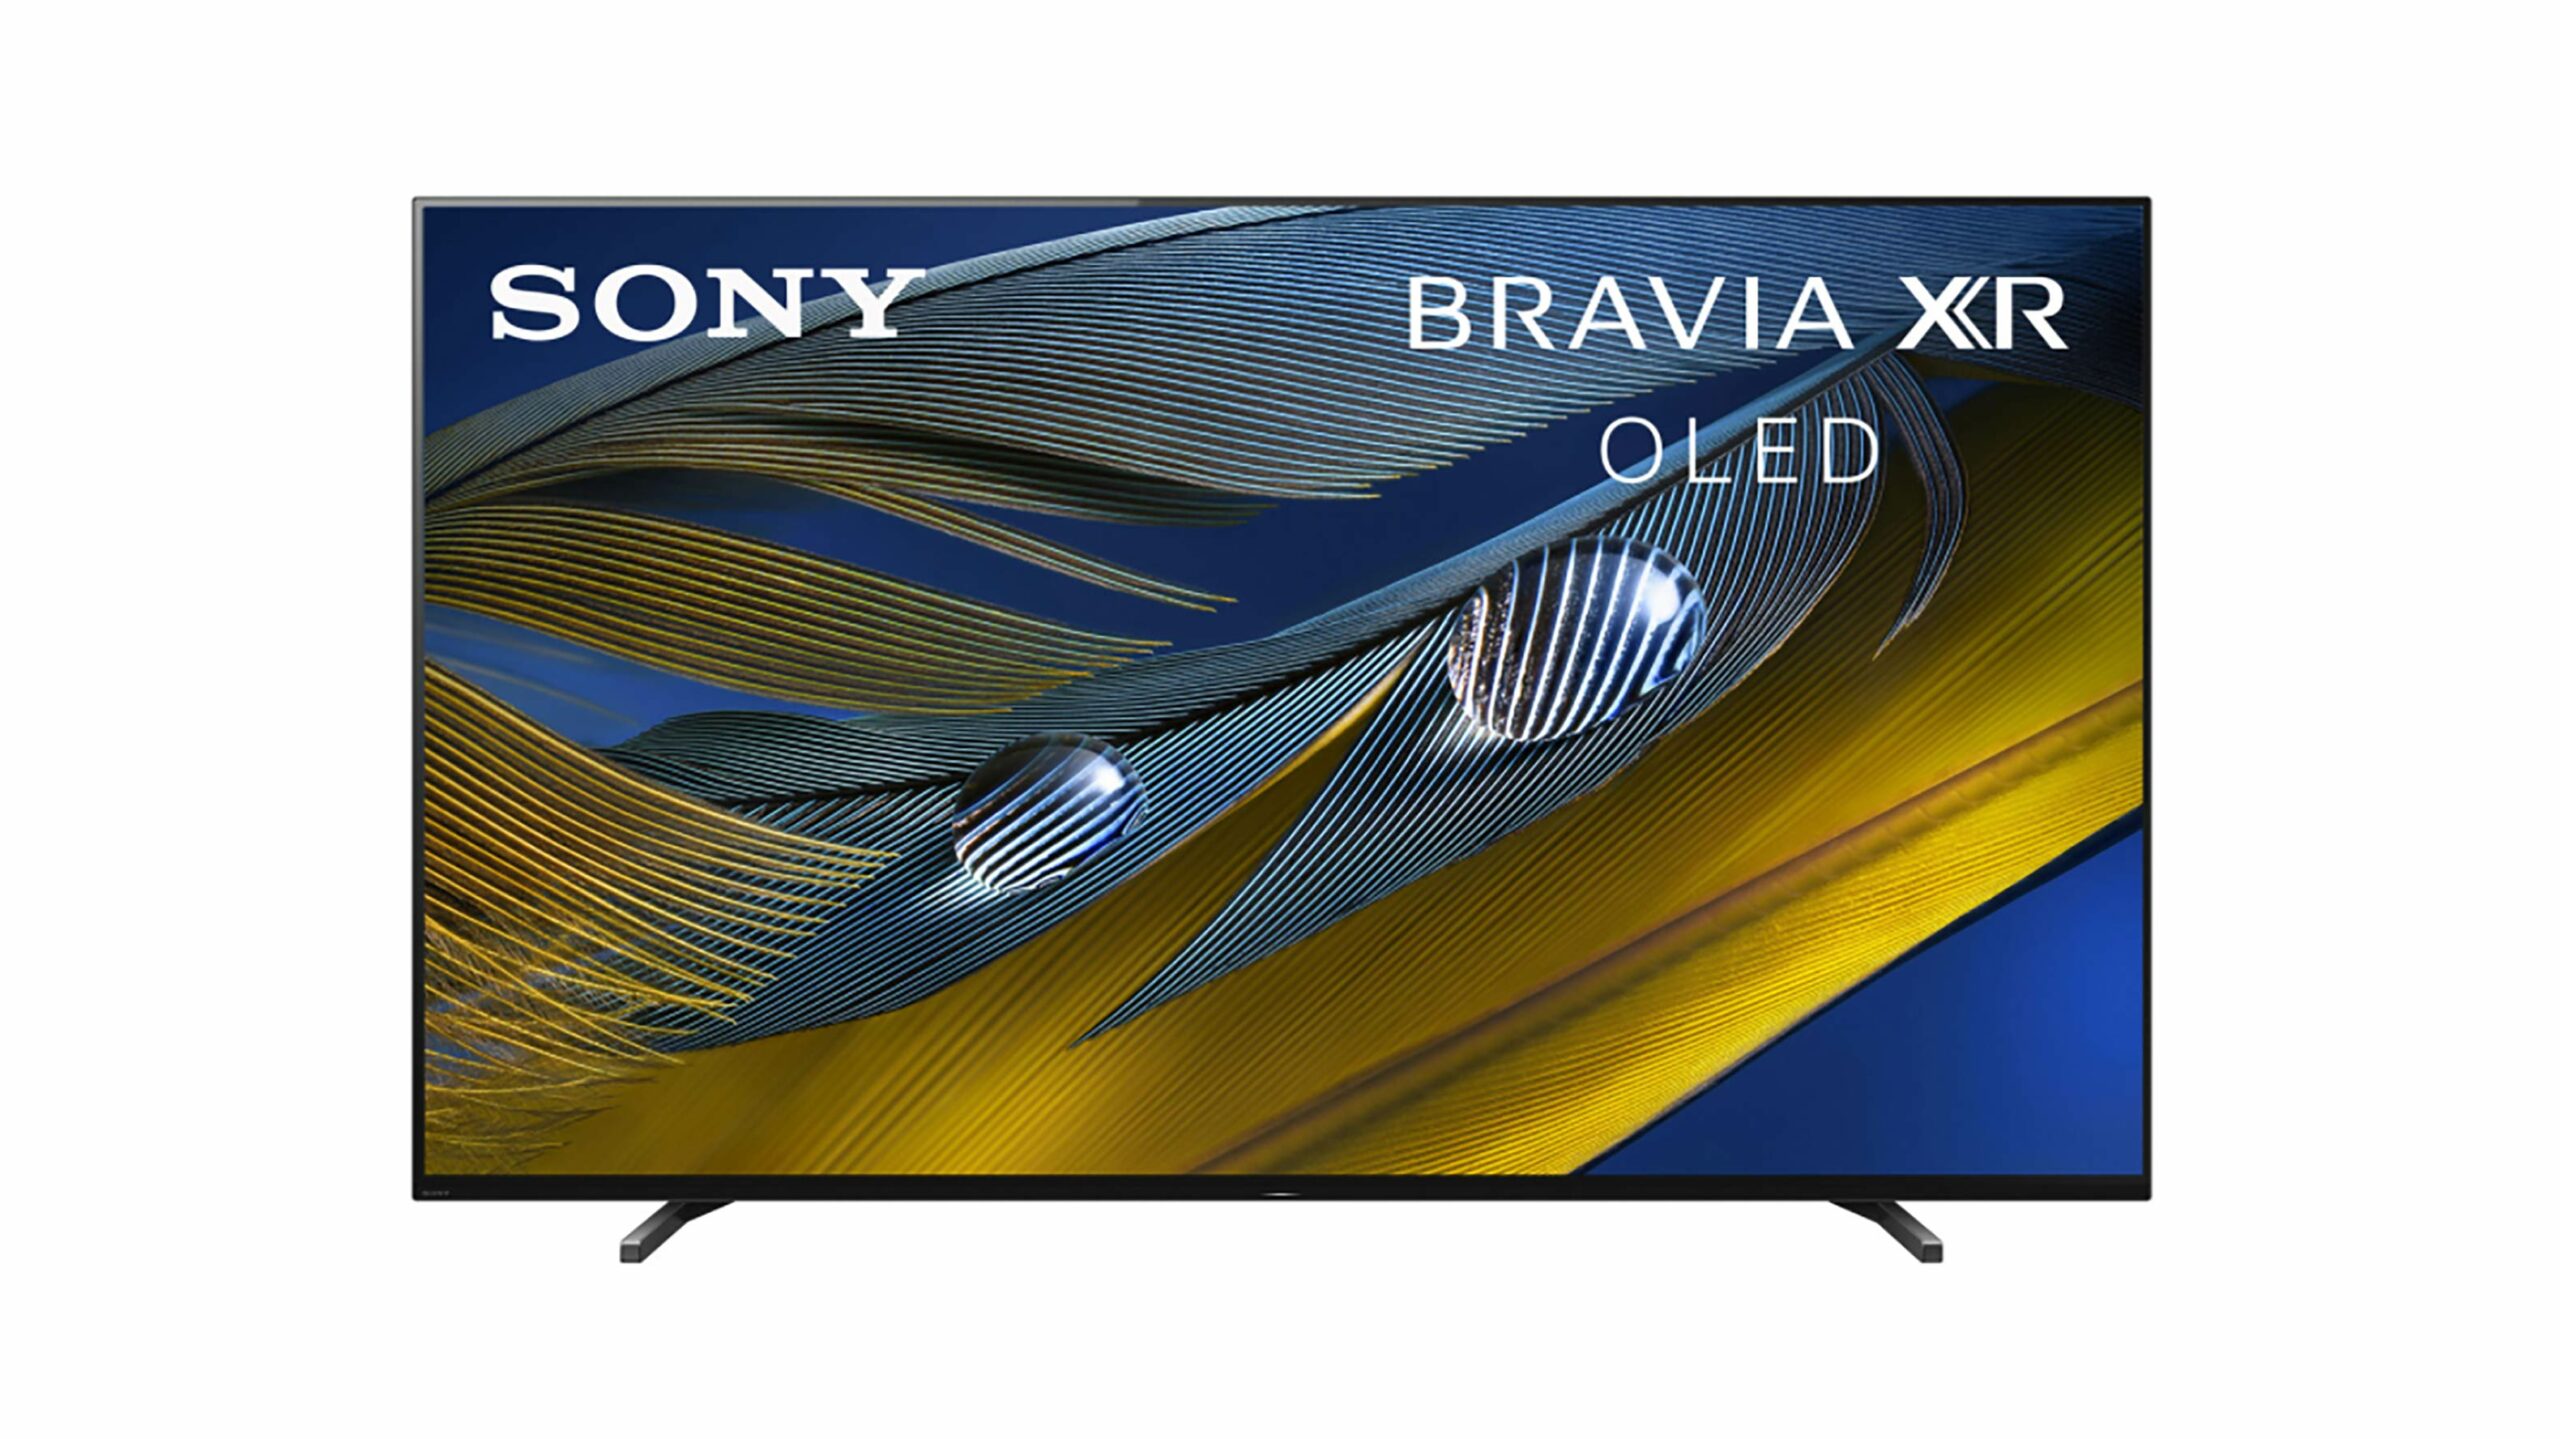 Sony Bravia XR OLED smart TV